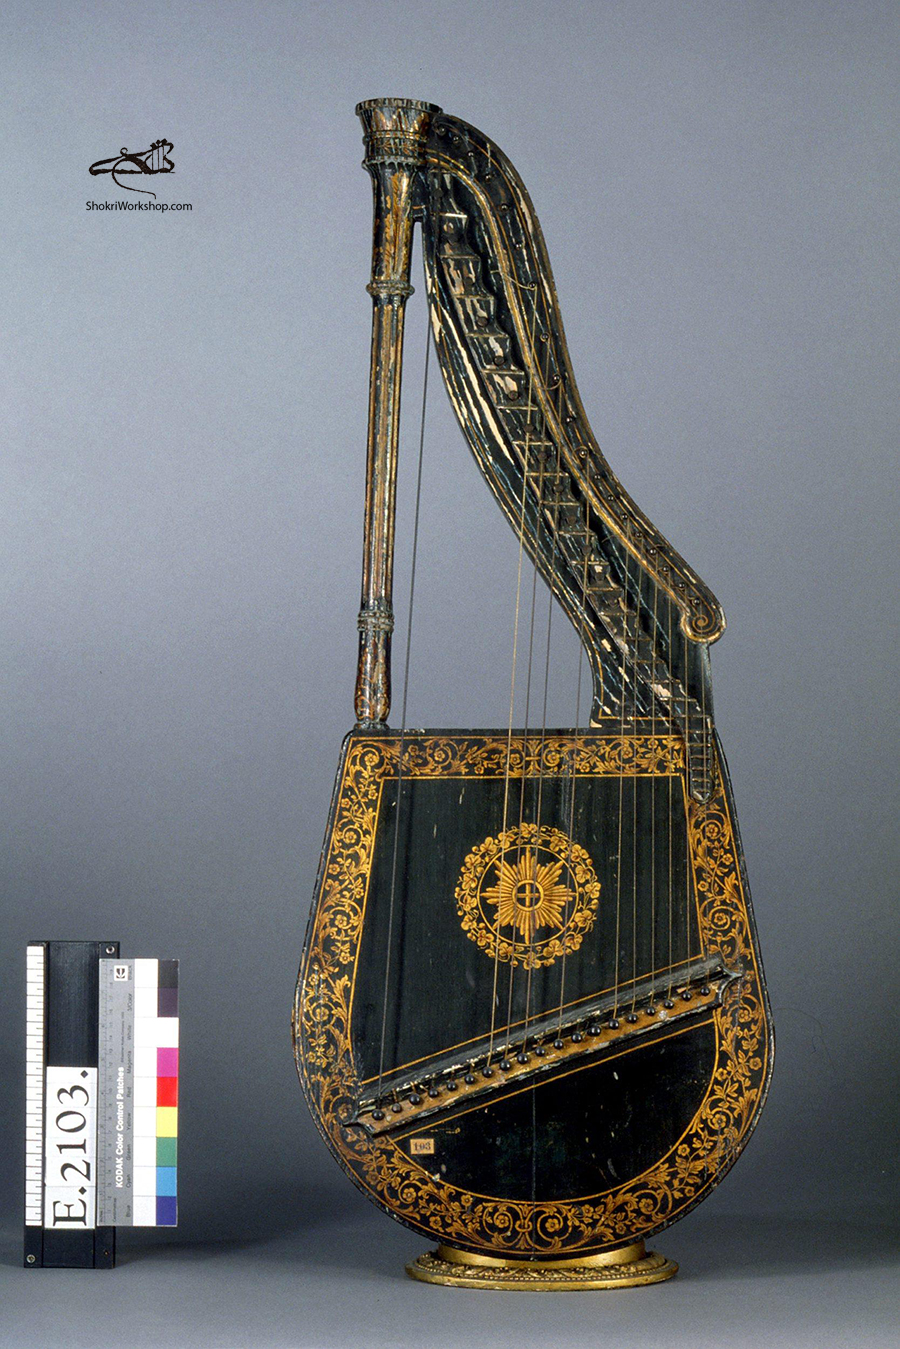 Harpe ditale